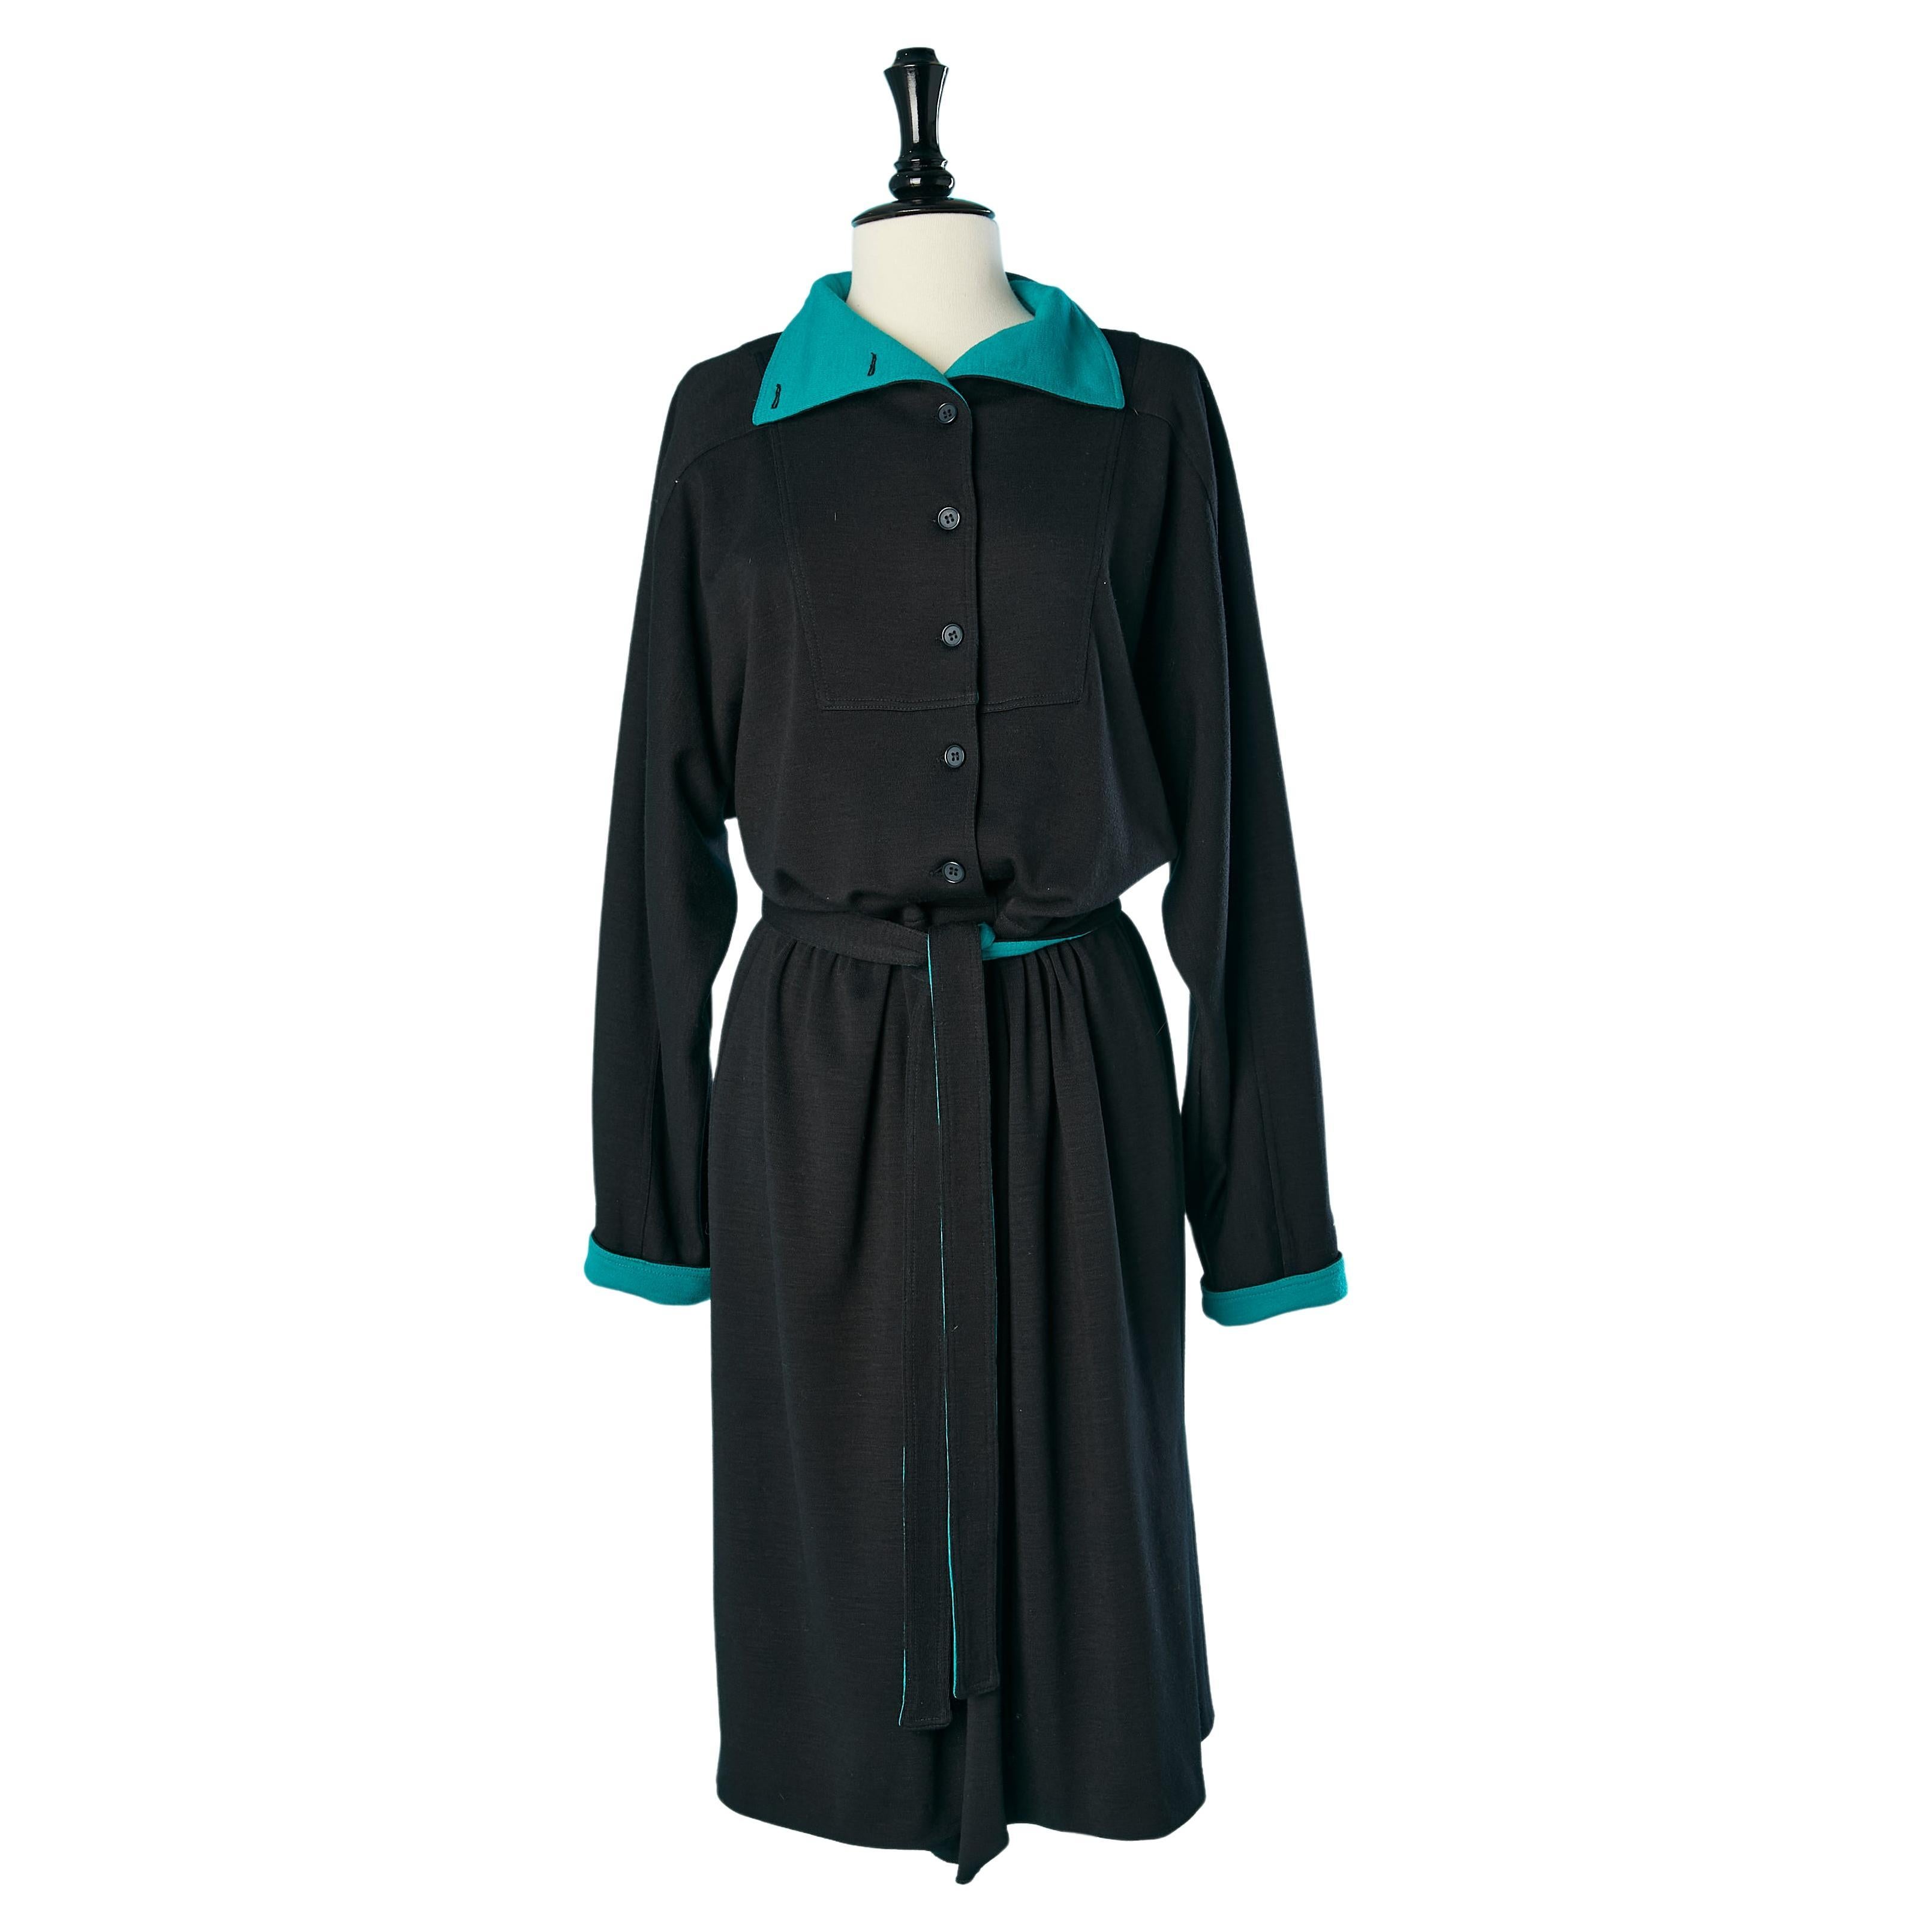 Black wool jersey dress with green details  Christian Dior Coordonnés Circa 1980 For Sale